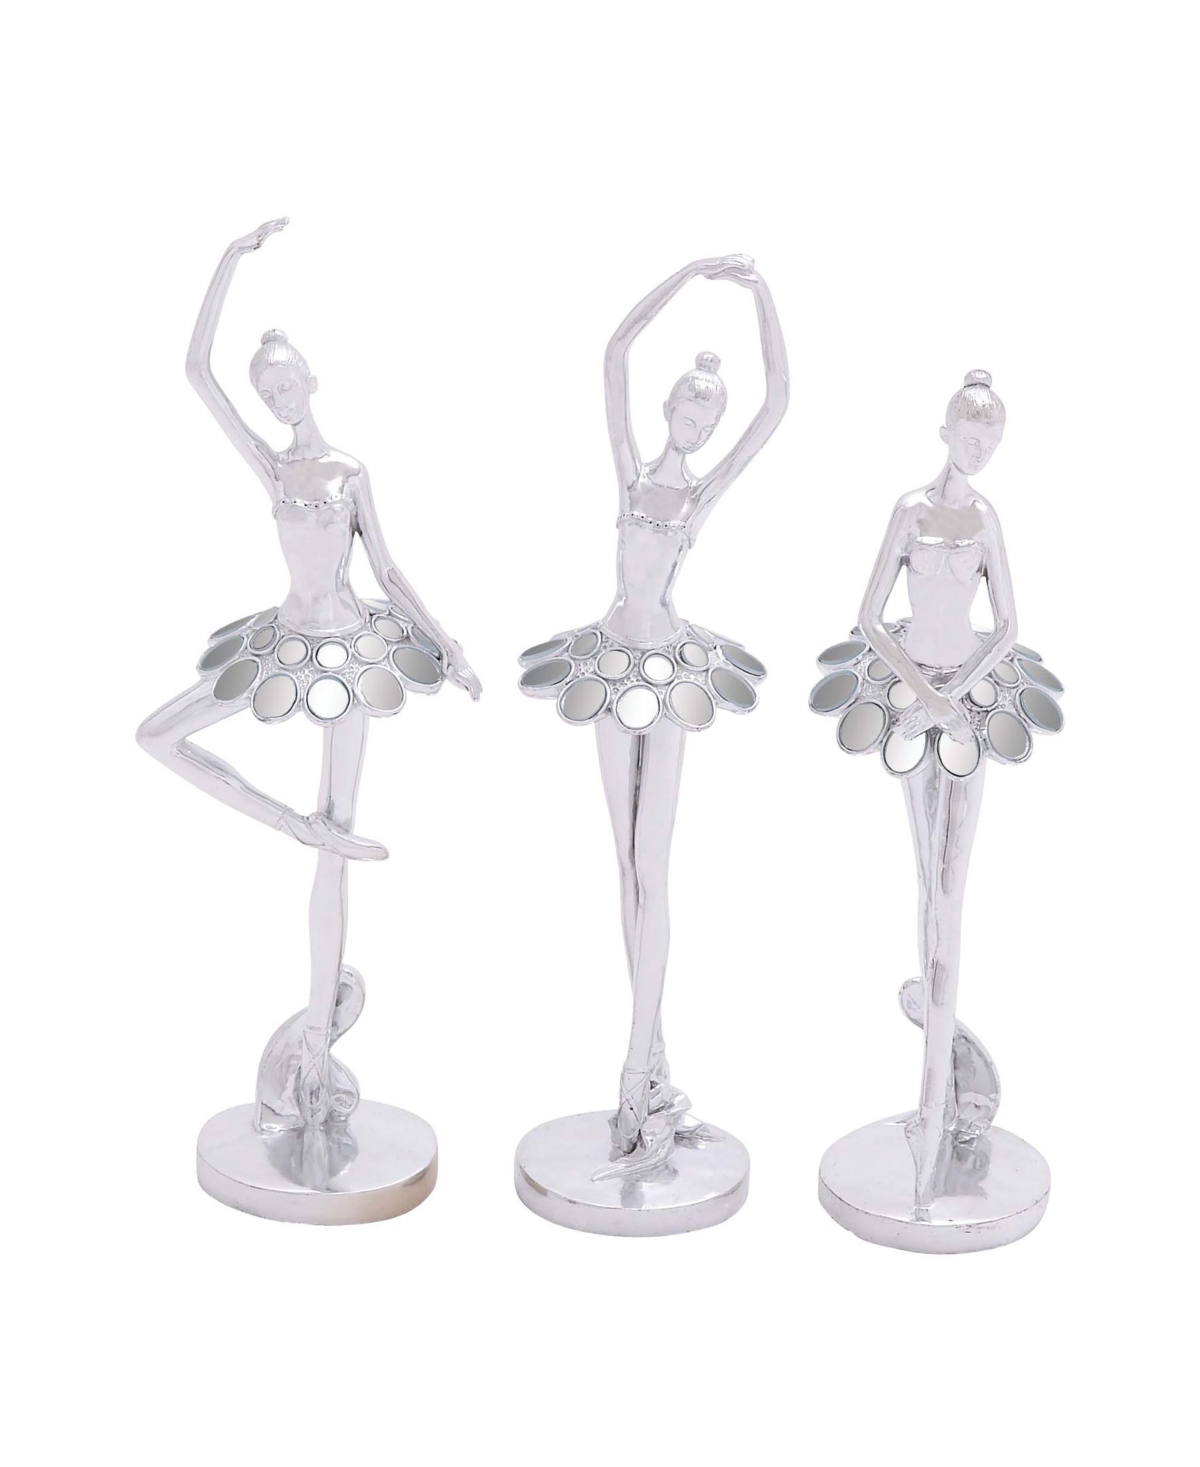 Rosemary Lane Modern Dancer Sculpture, Set Of 3 In Silver-tone